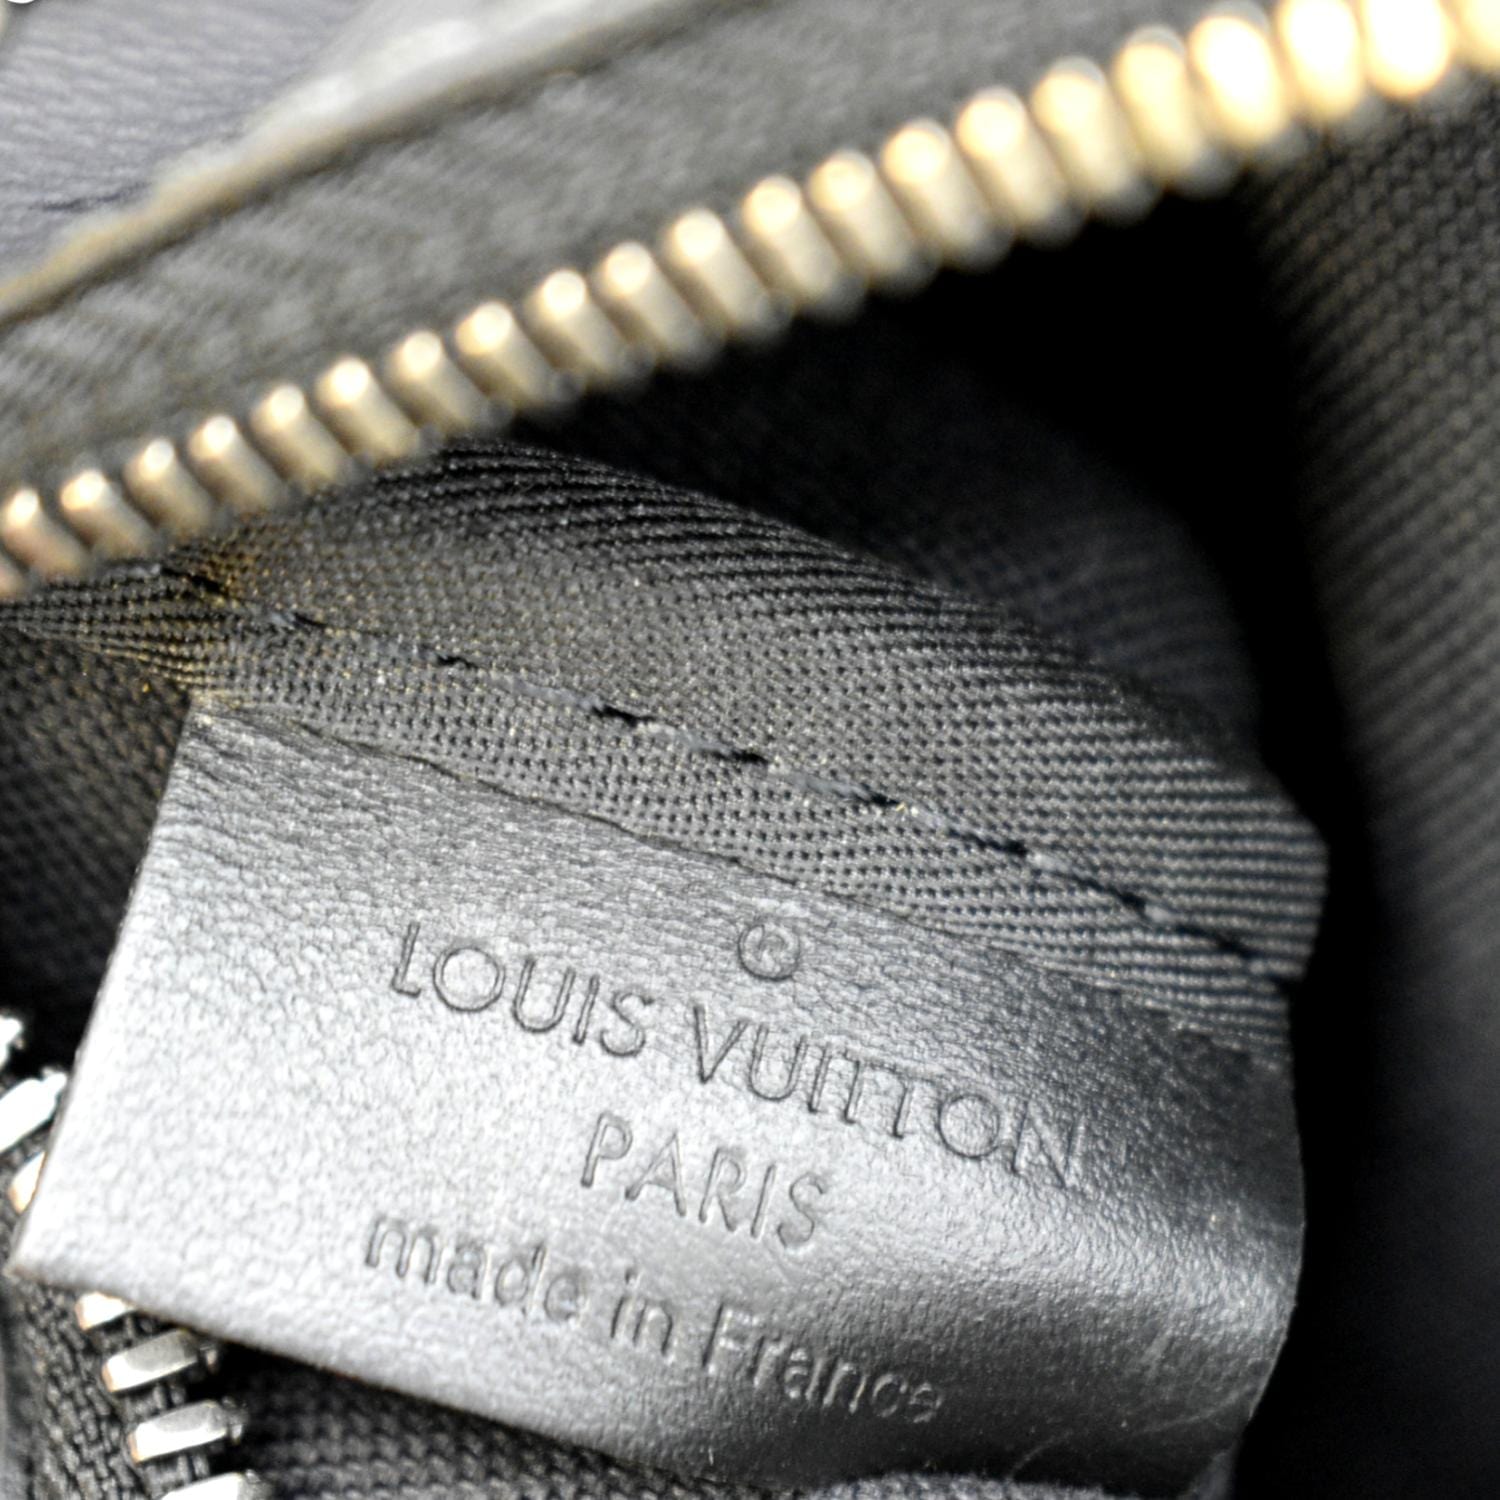 N50027 Louis Vuitton Damier Graphite TRIO MESSENGER